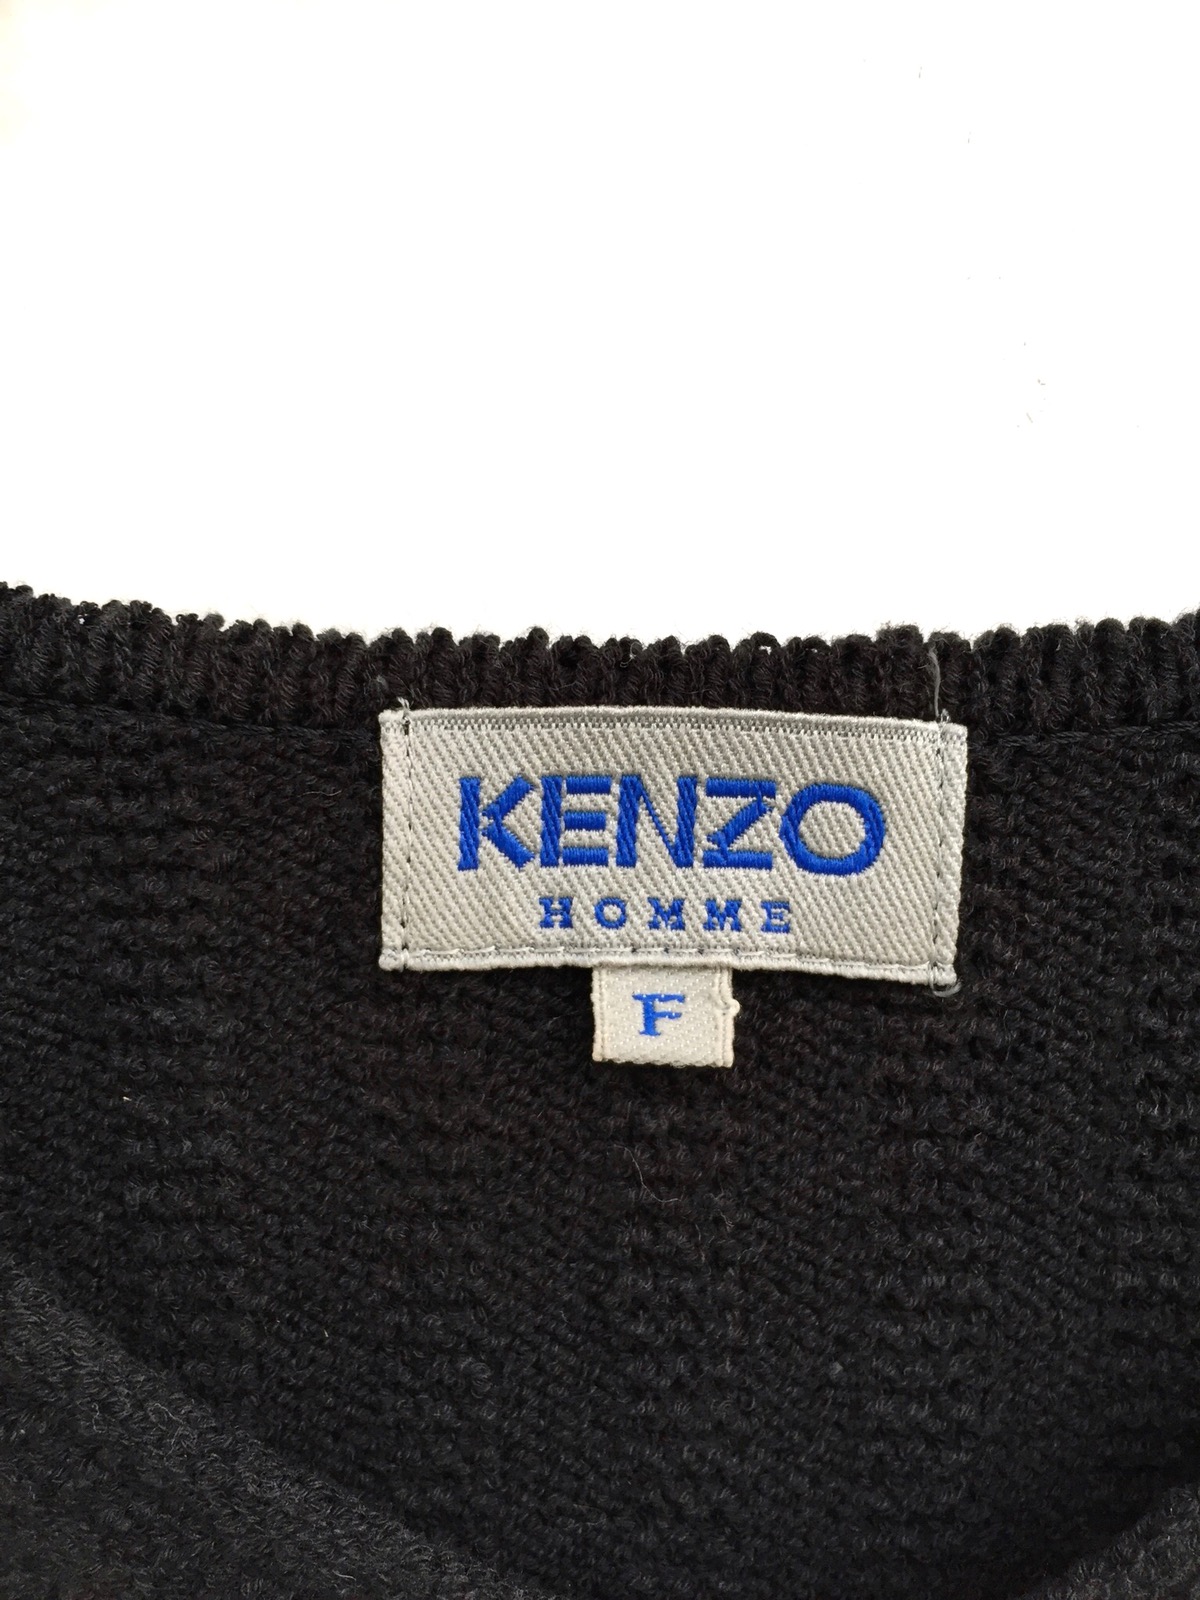 Vintage Japanese Brand Kenzo Hand Knit Black Sweatshirt - 6